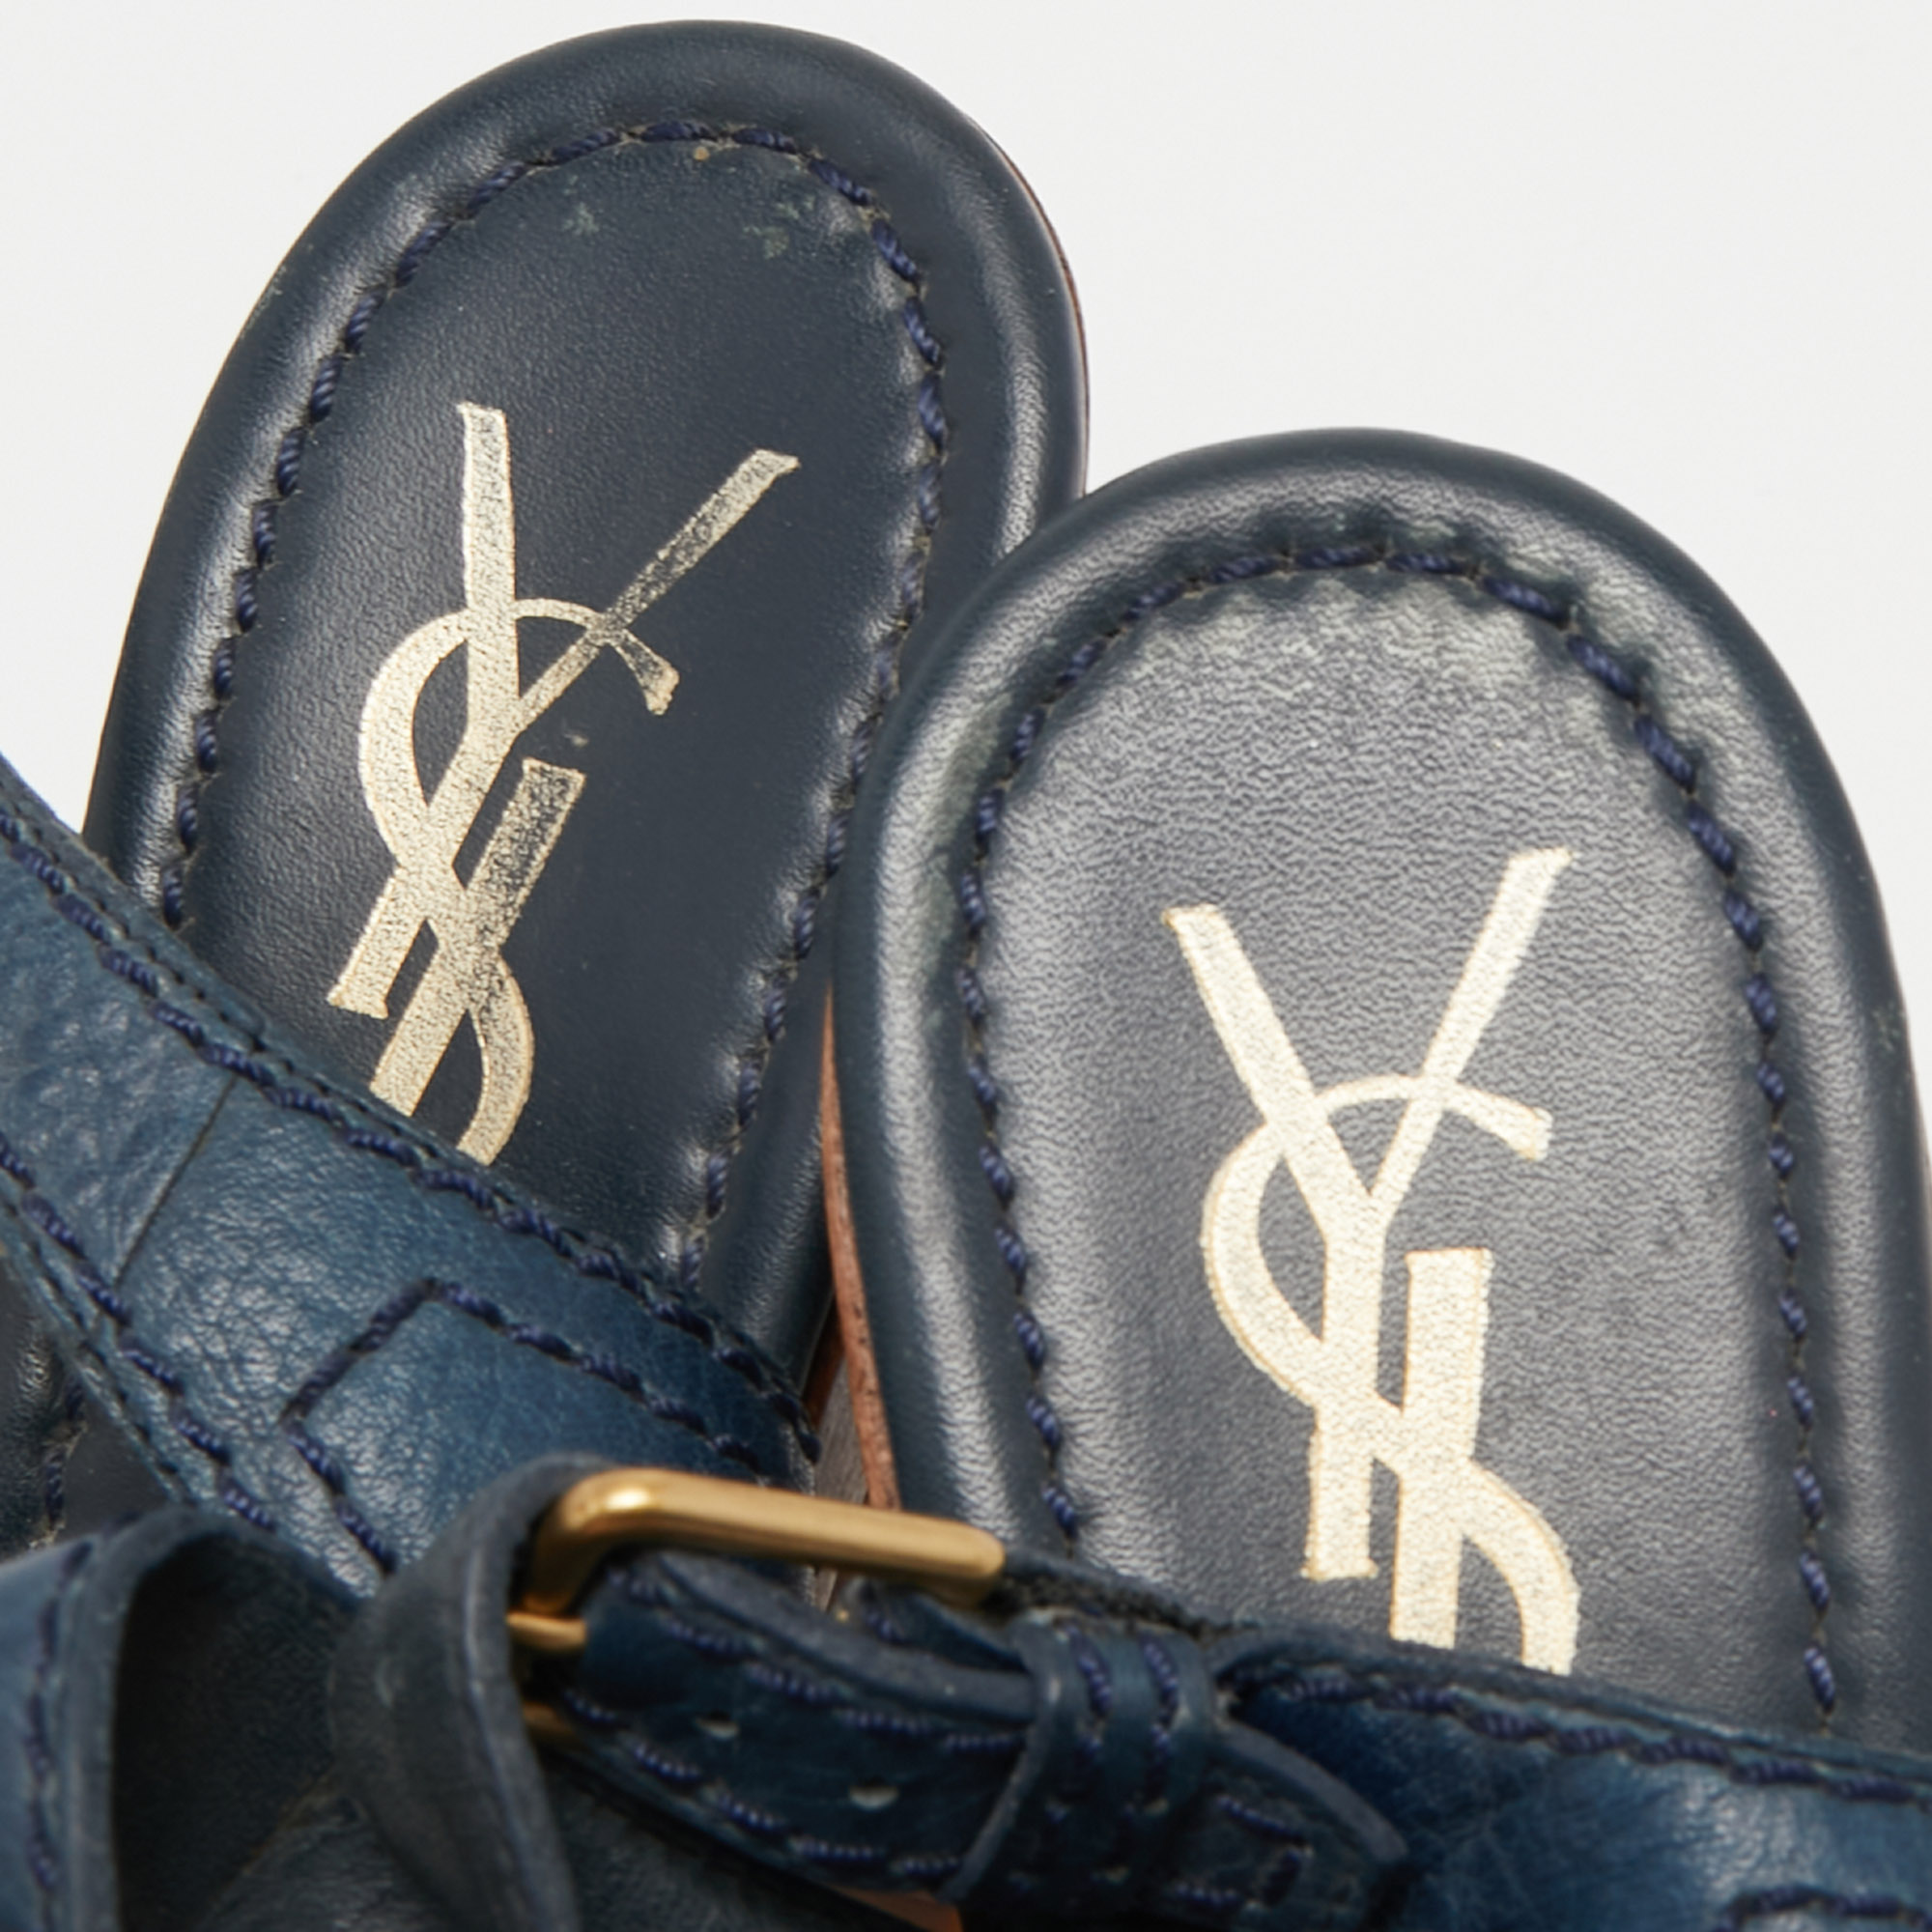 Yves Saint Laurent Blue Leather Slingback Sandals Size 38.5